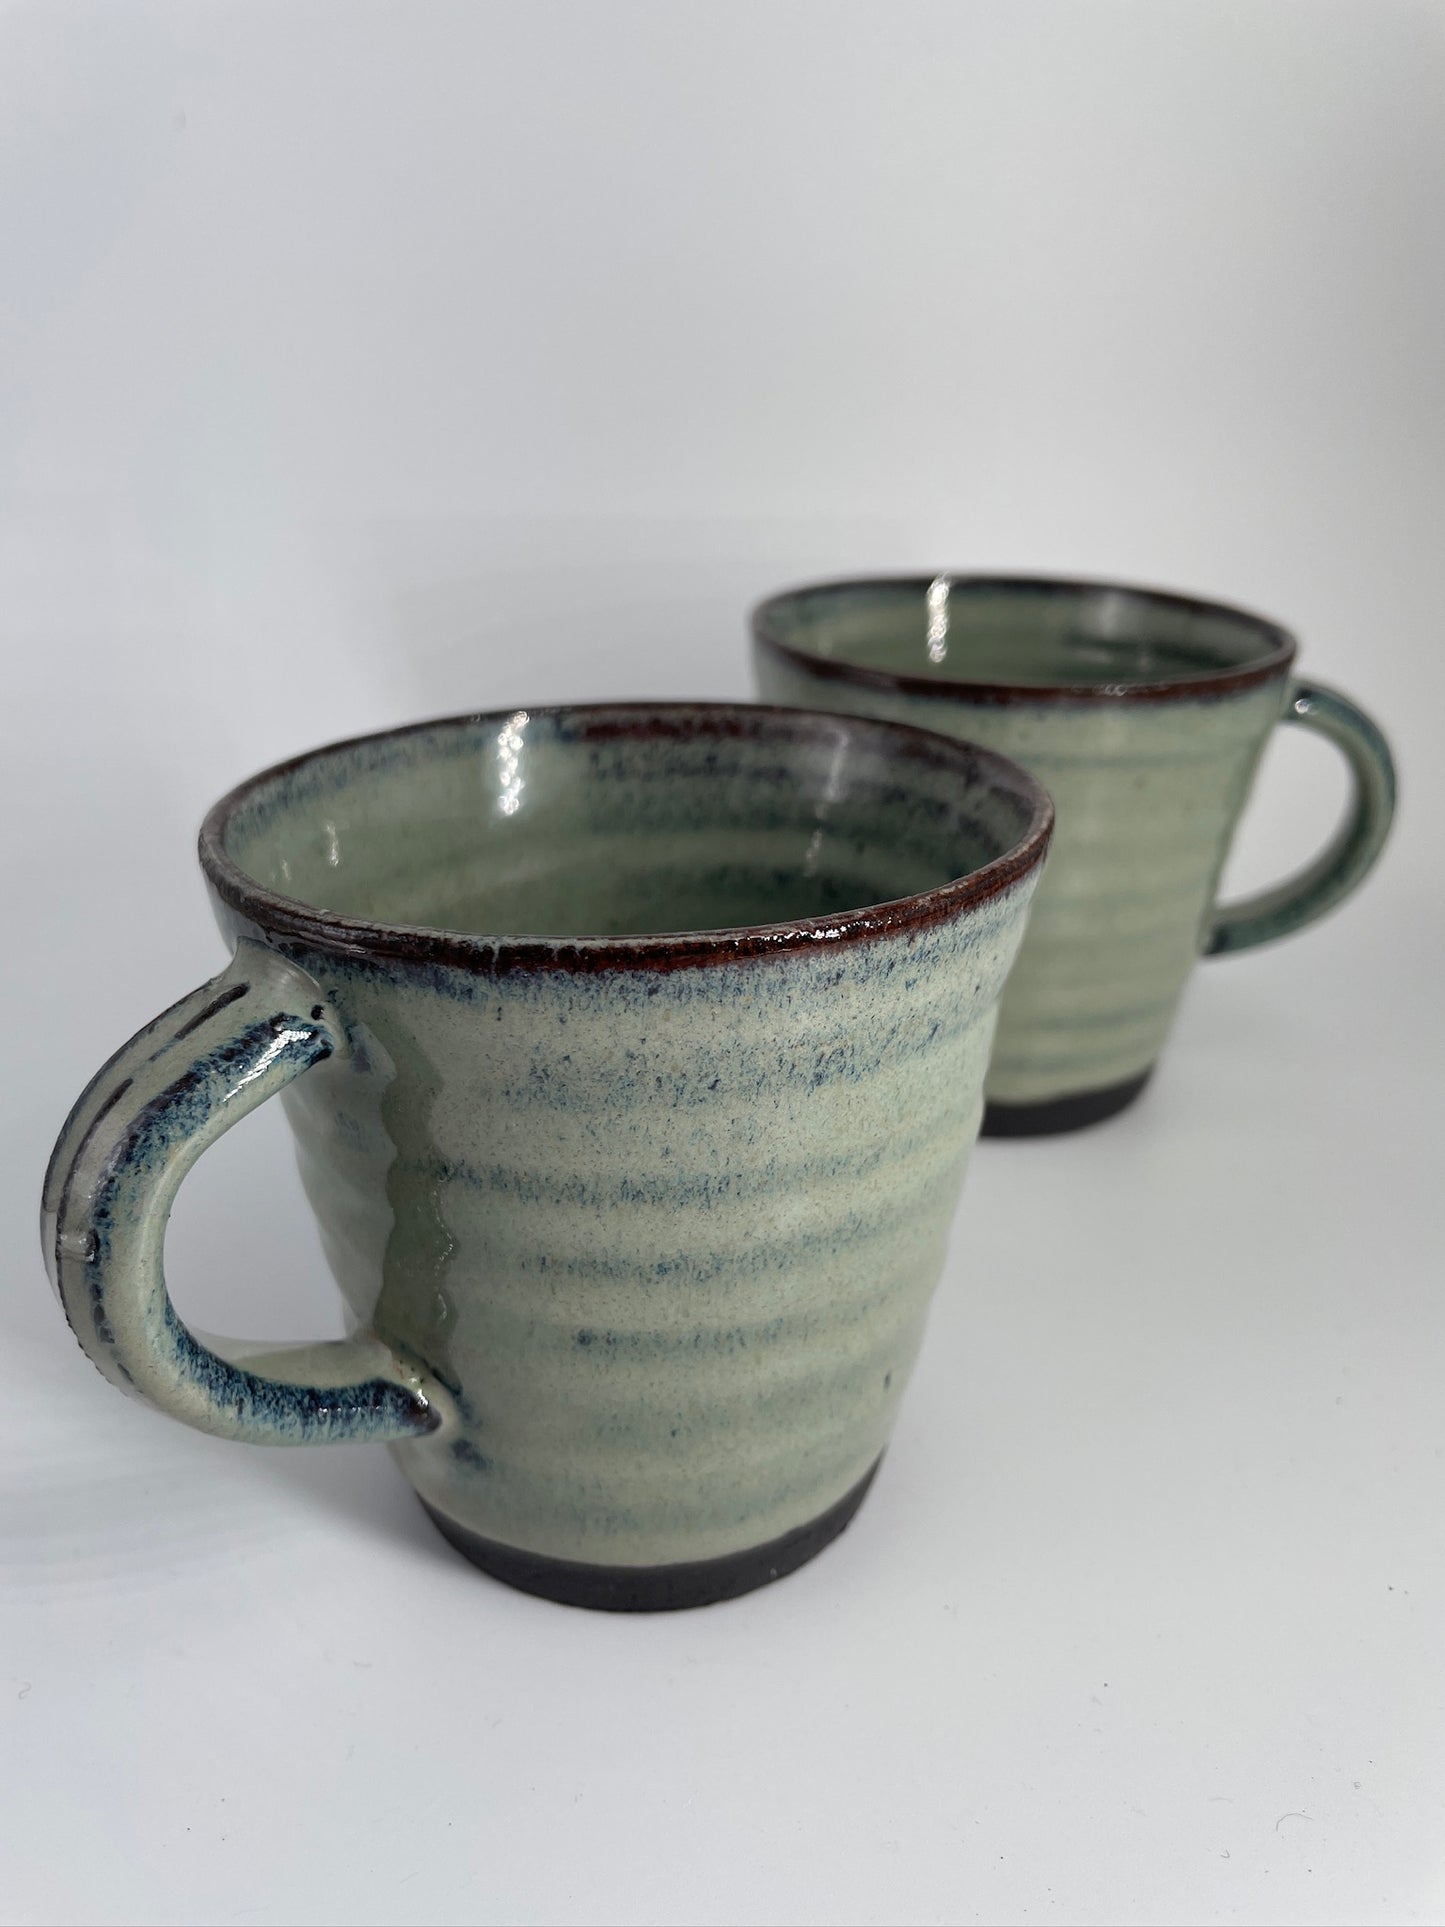 2 green mugs - medium/8oz